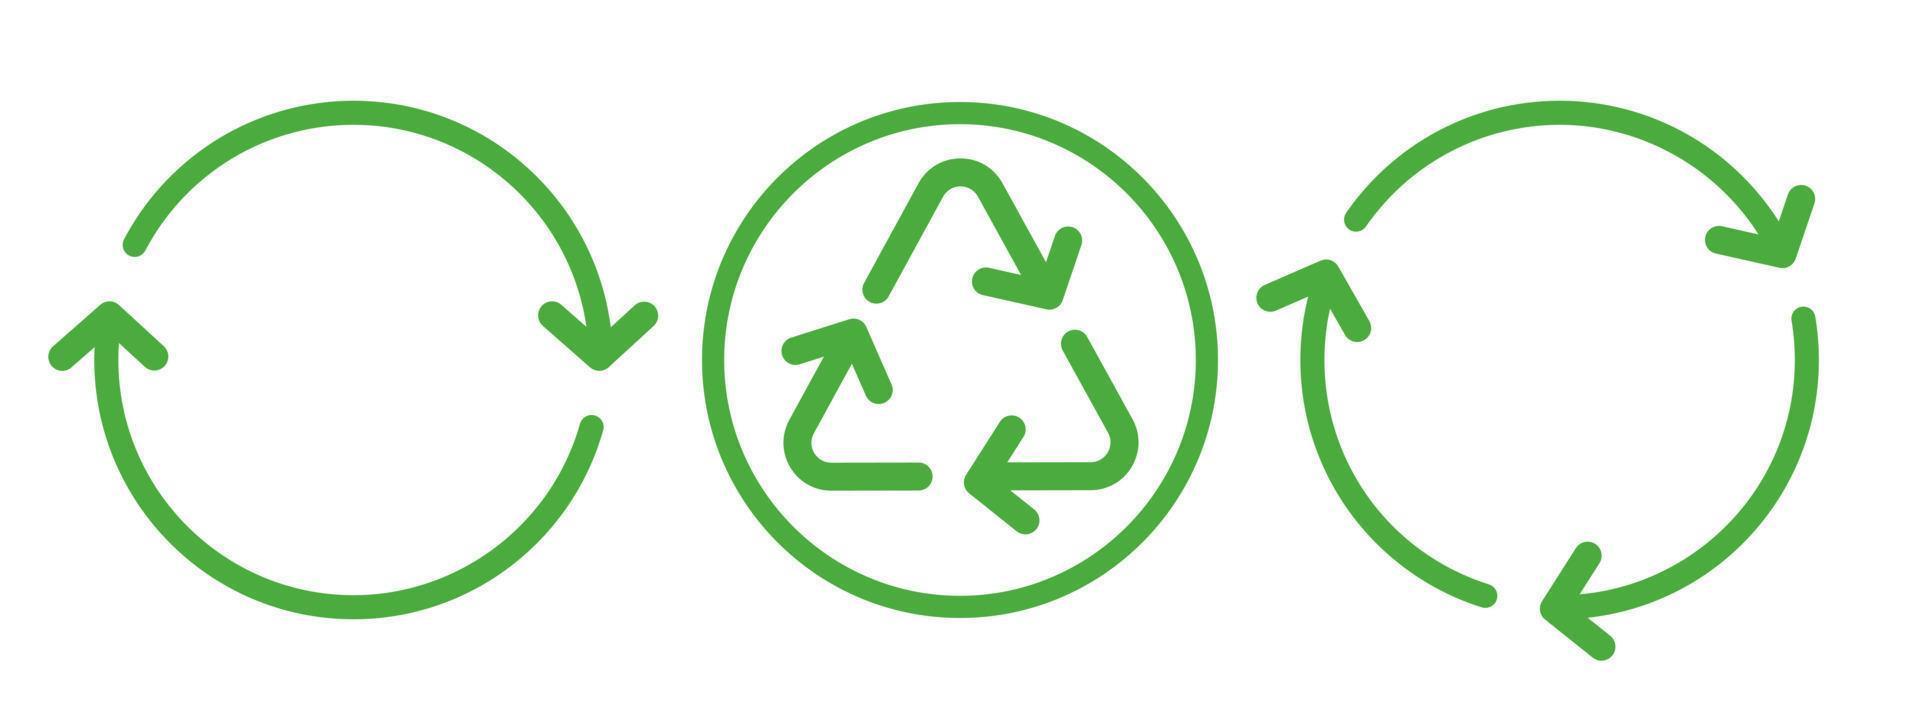 Recycling- und Rotationspfeil-Icon-Set. flacher Vektor des Symbols